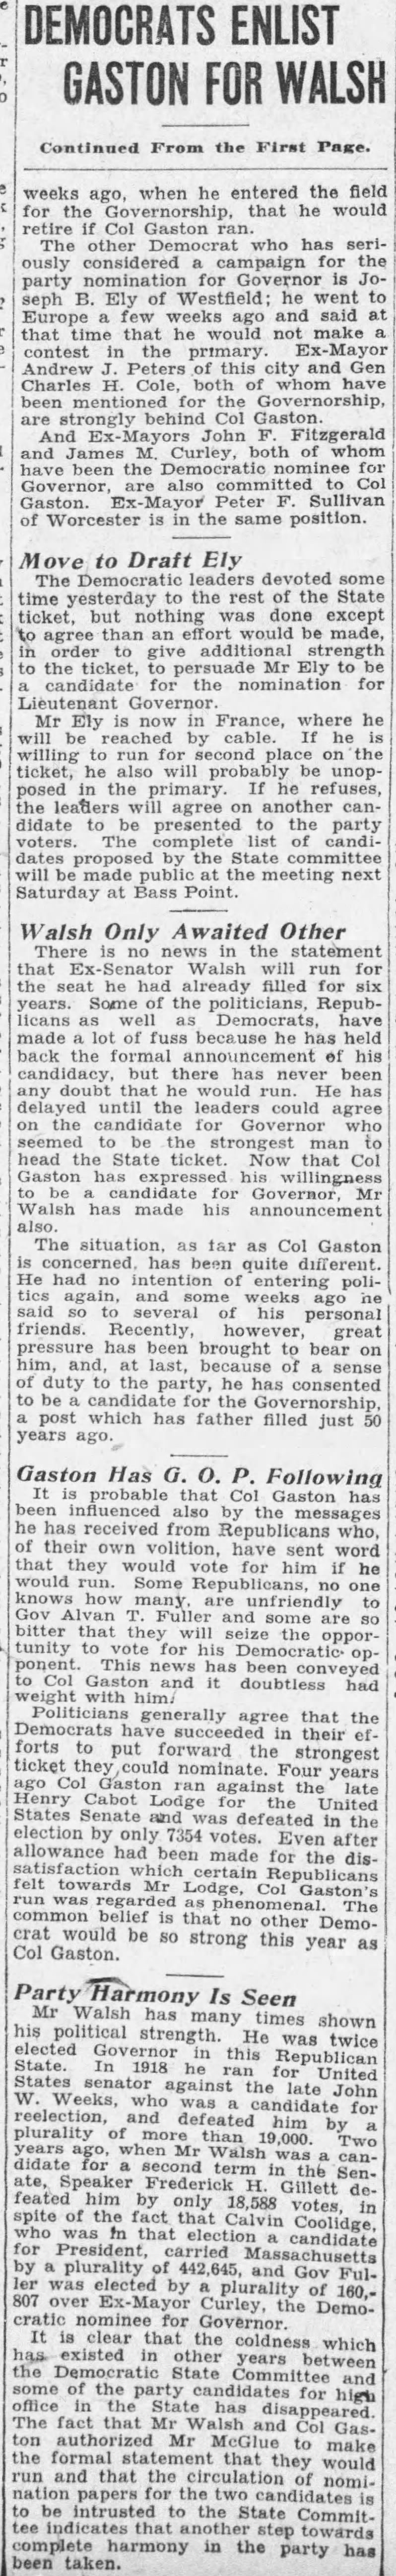 Democrats Enlist Gaston For Walsh (part 2)